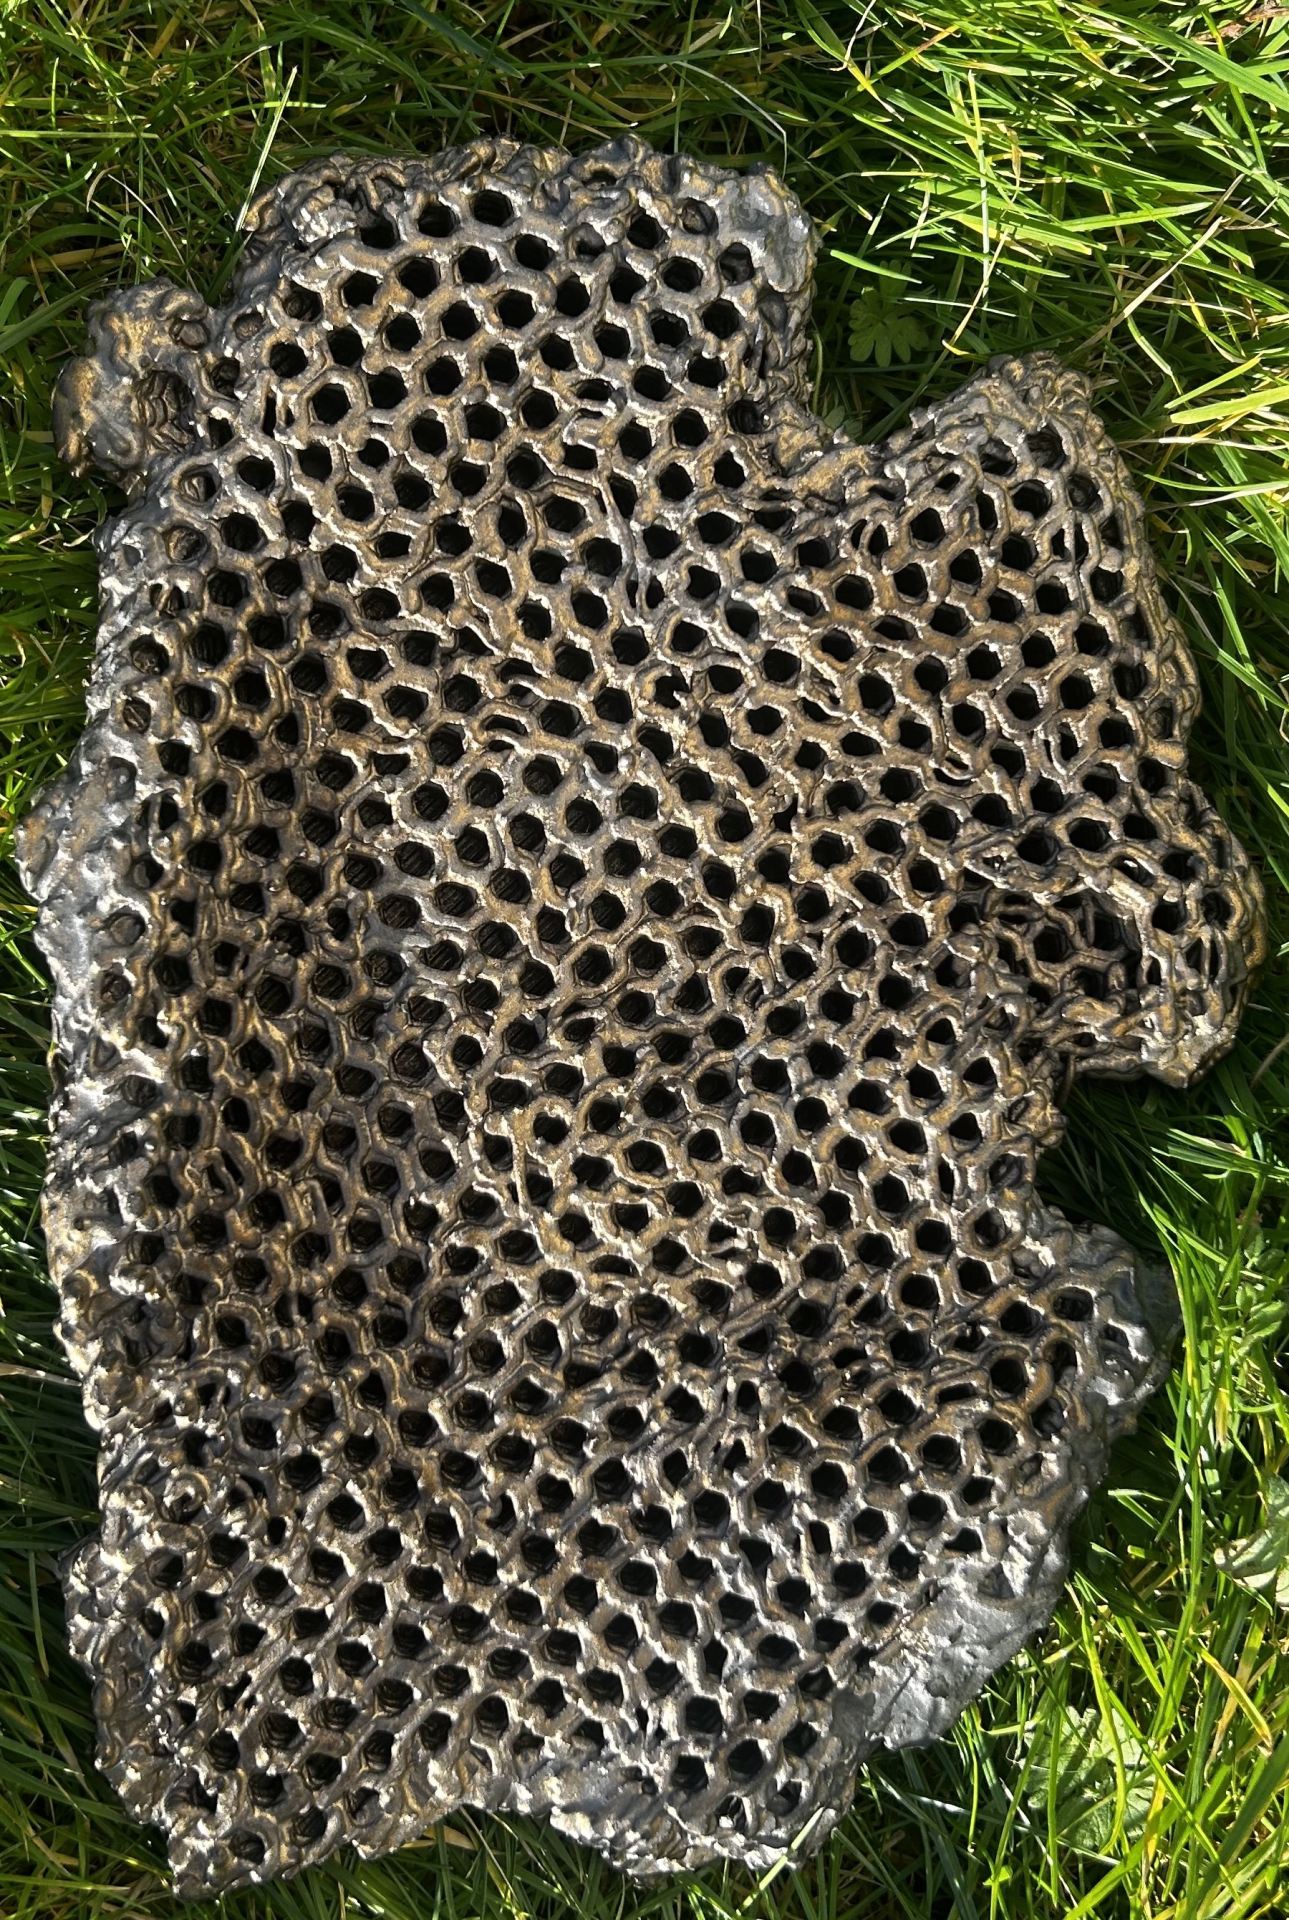 A 3-d printed ceramic honeycomb with reflective bronze glaze.